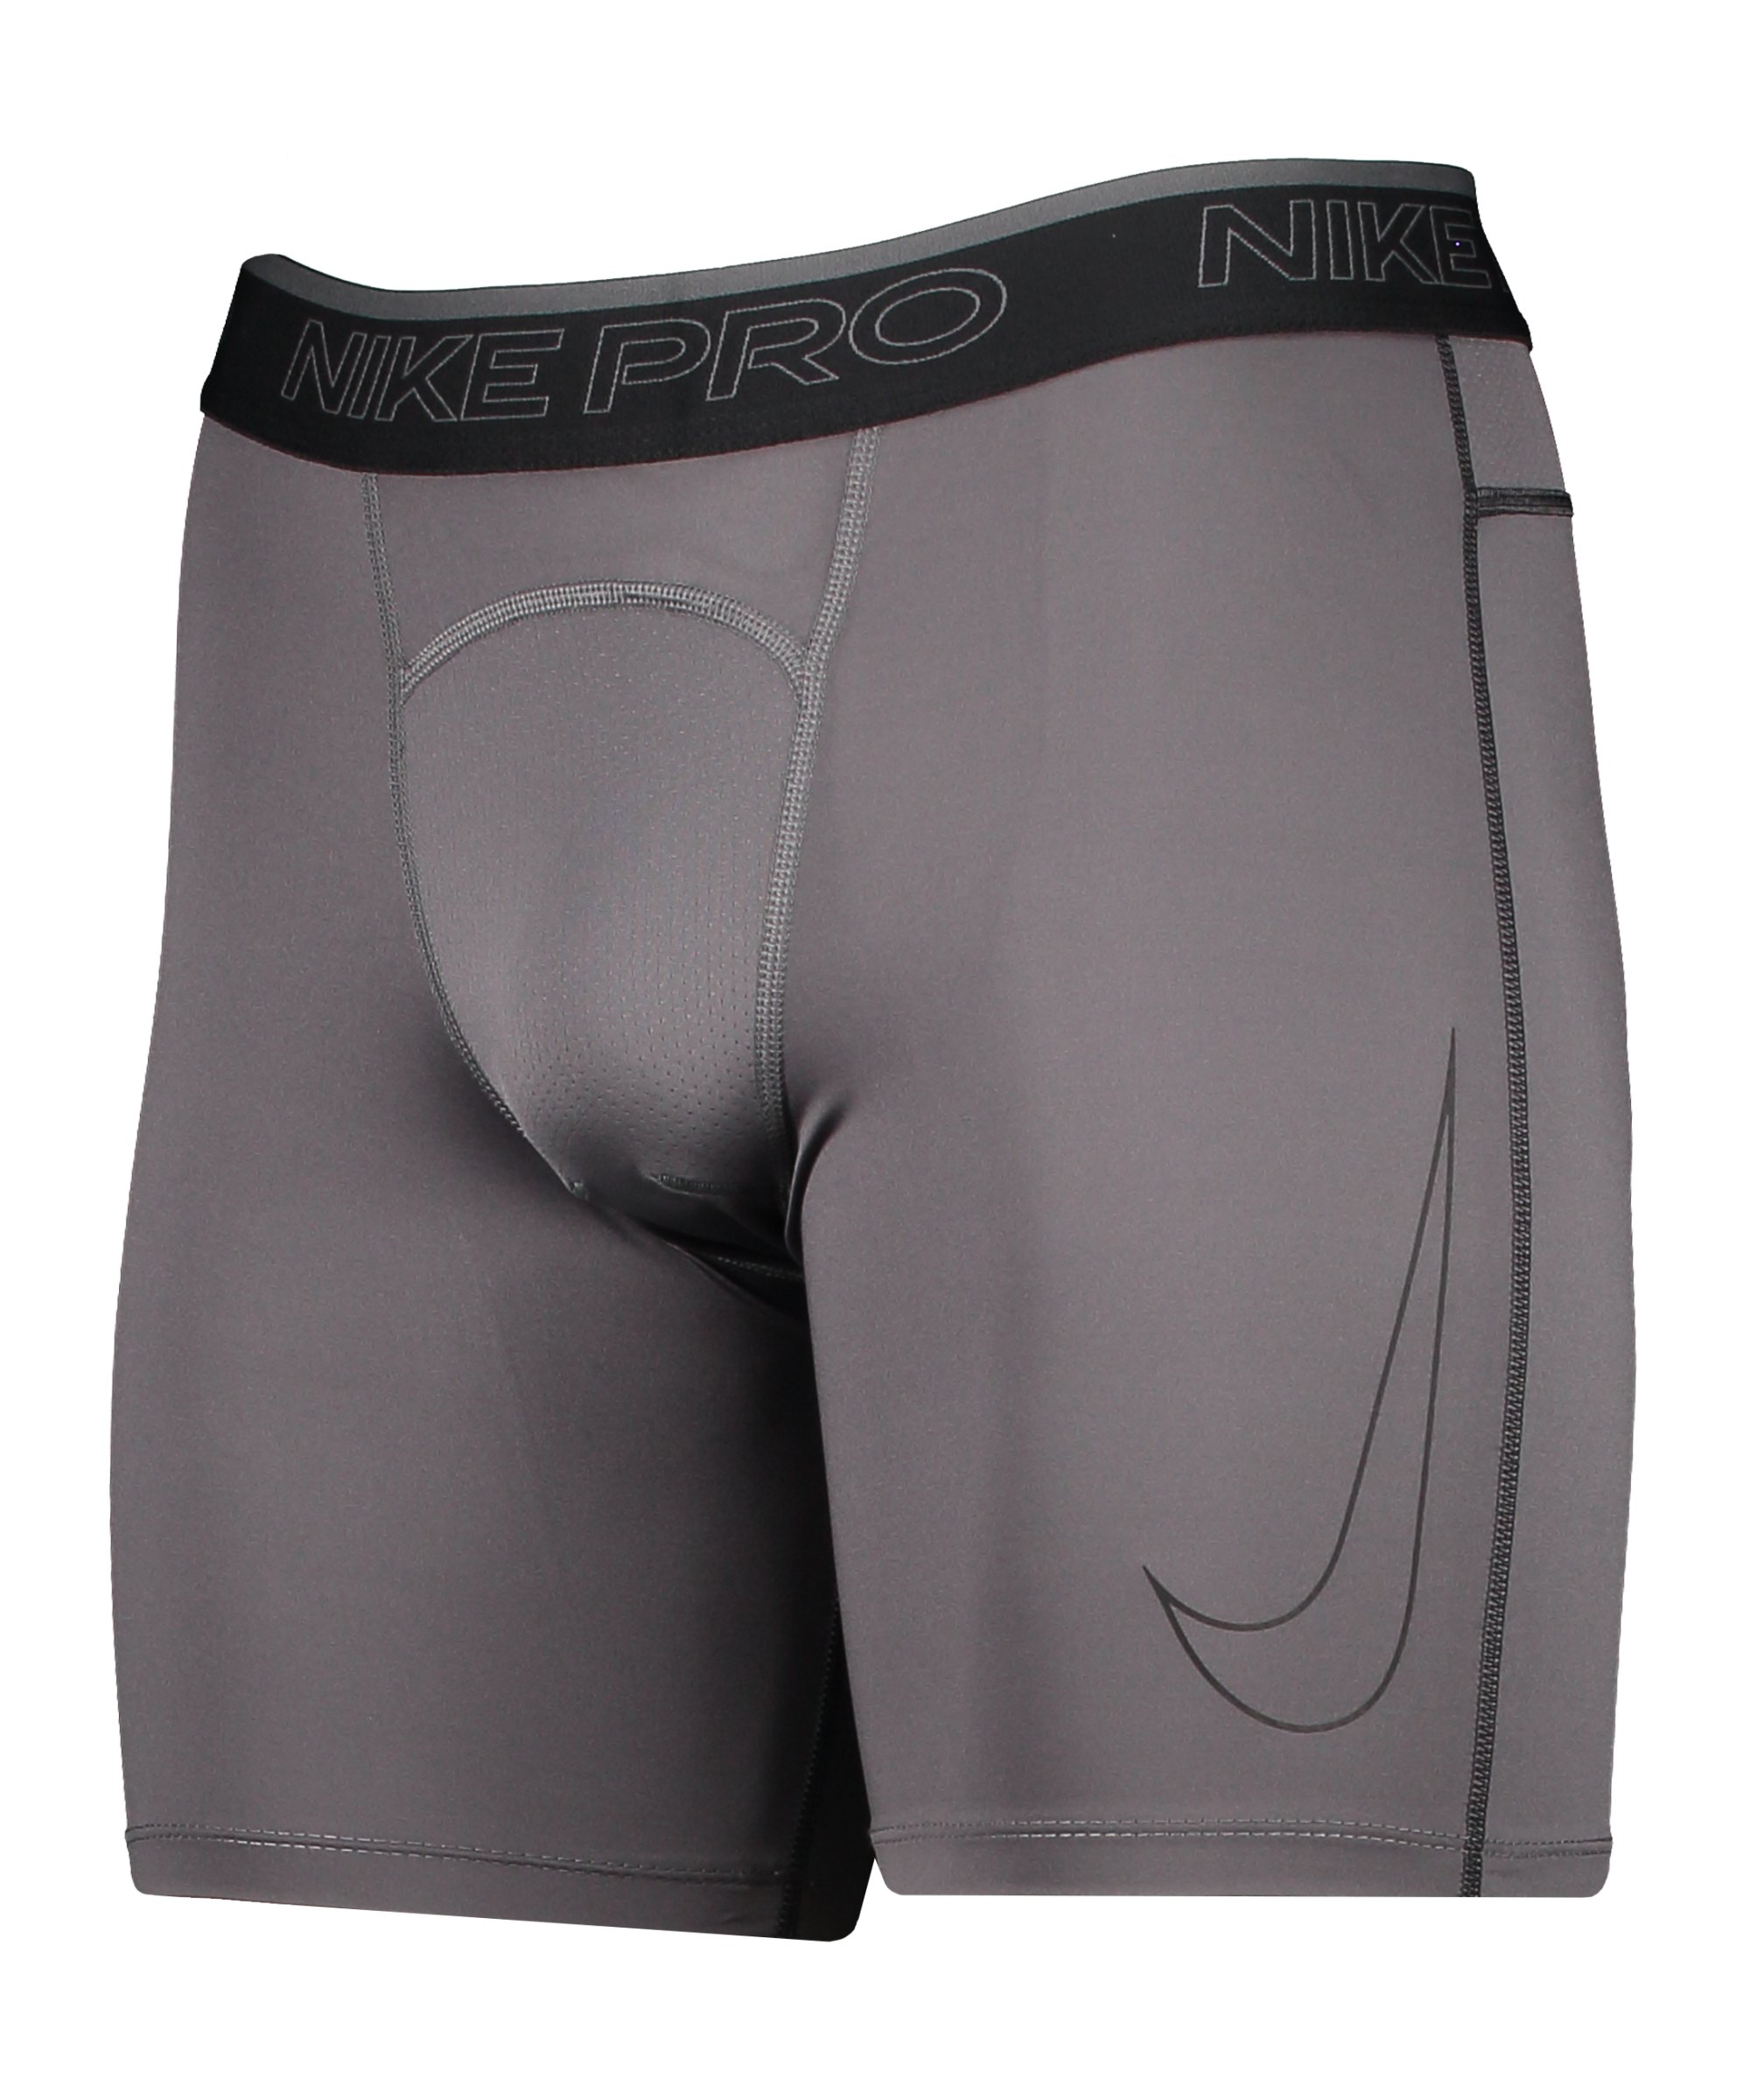 Nike Pro Short Grau Schwarz F068 - grau